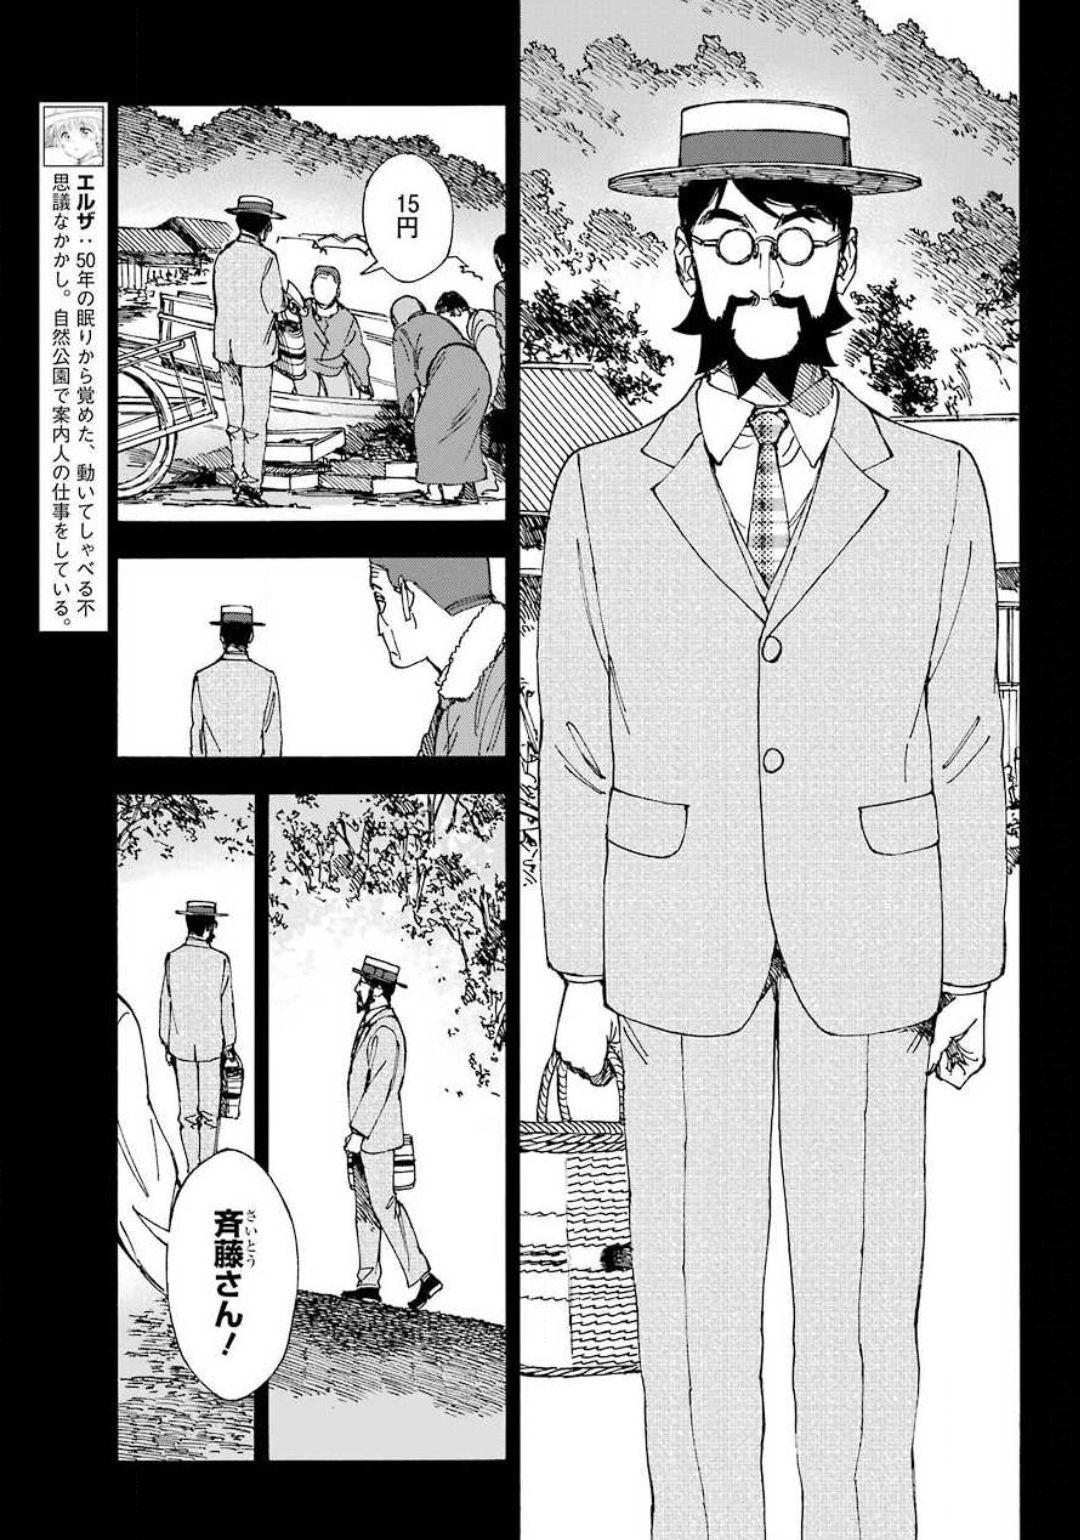 Hotomeku-kakashi - Chapter 07-1 - Page 3